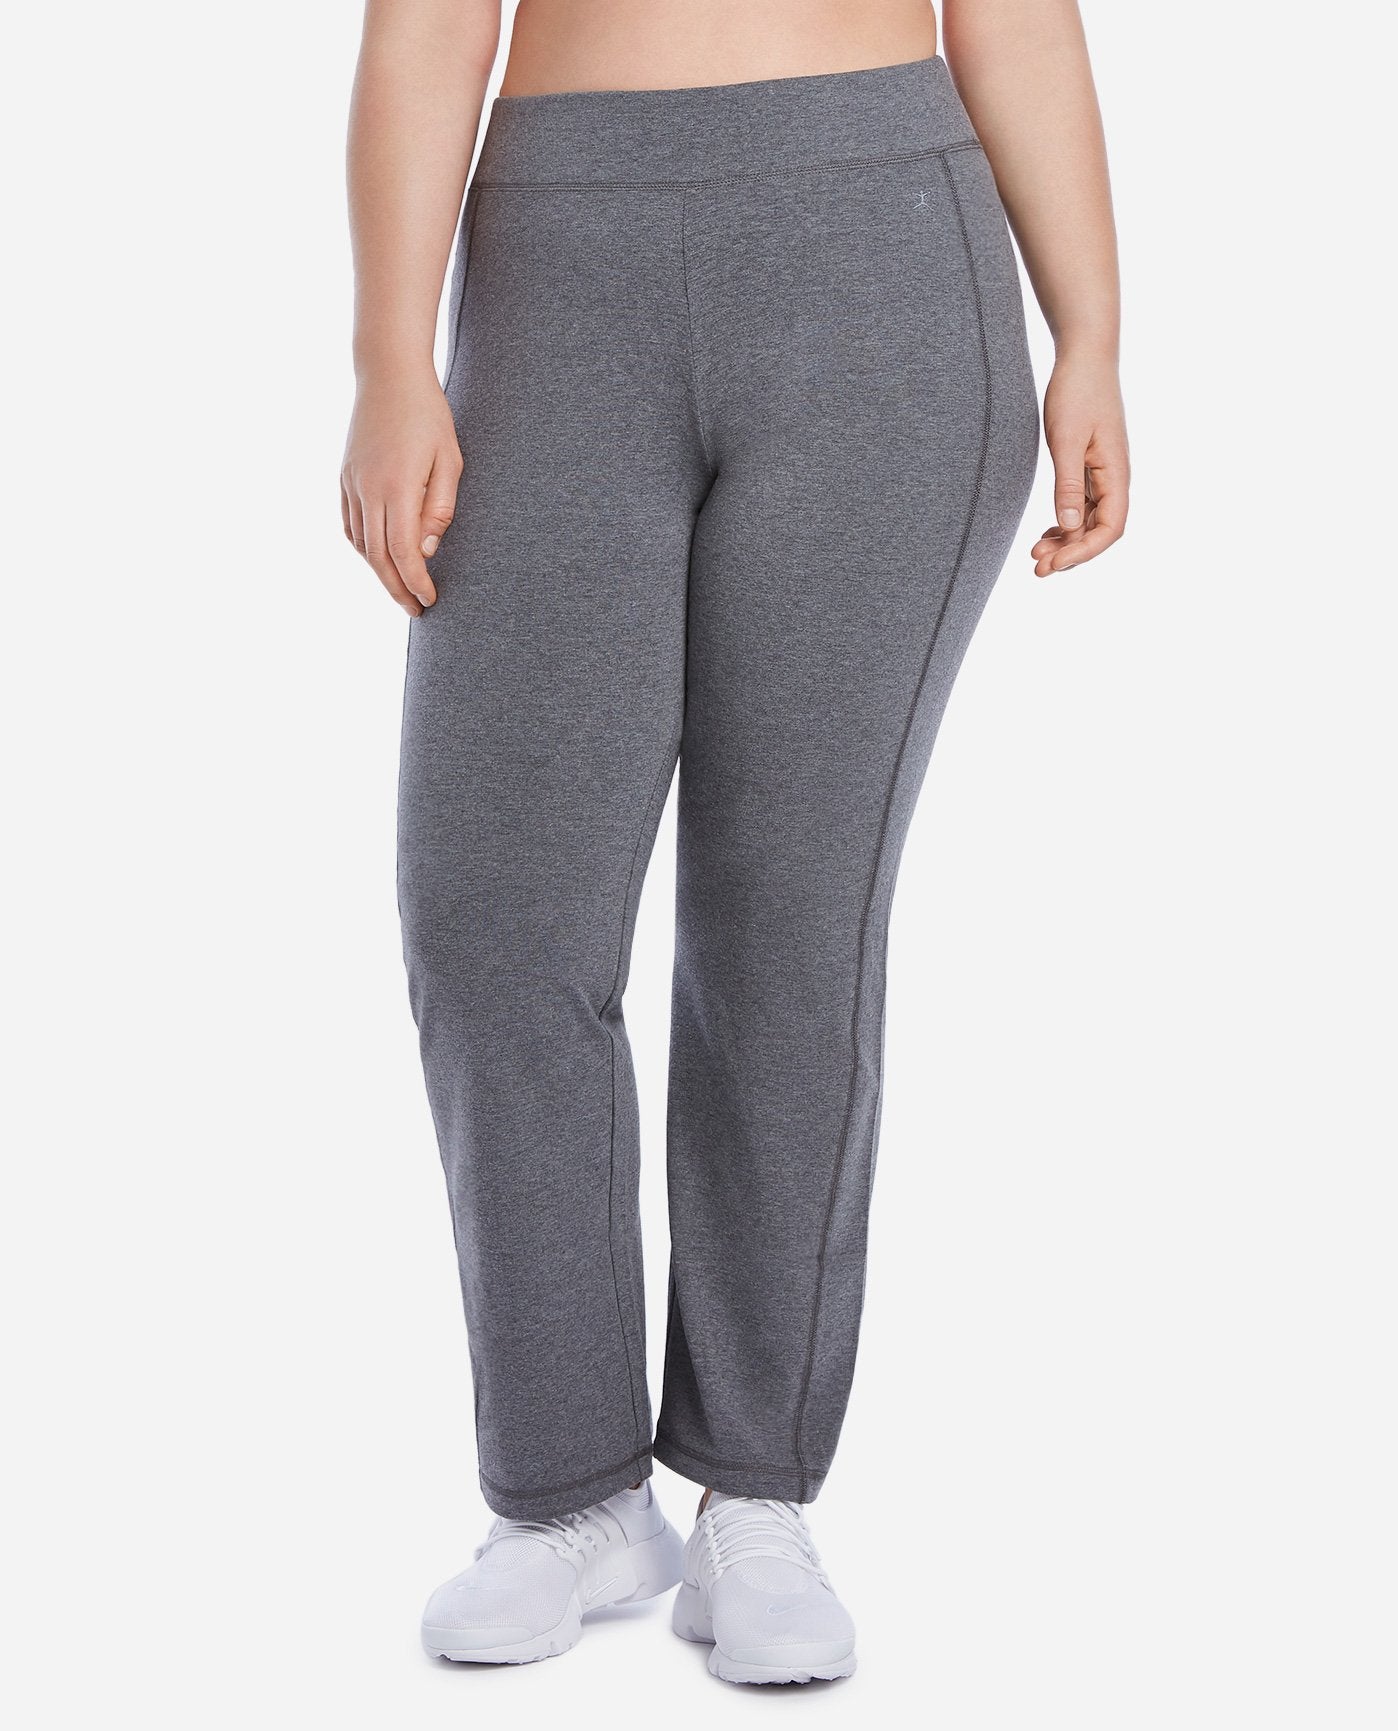 Danskin Women's Athleisure Sleek Fit Crop Yoga Pants 